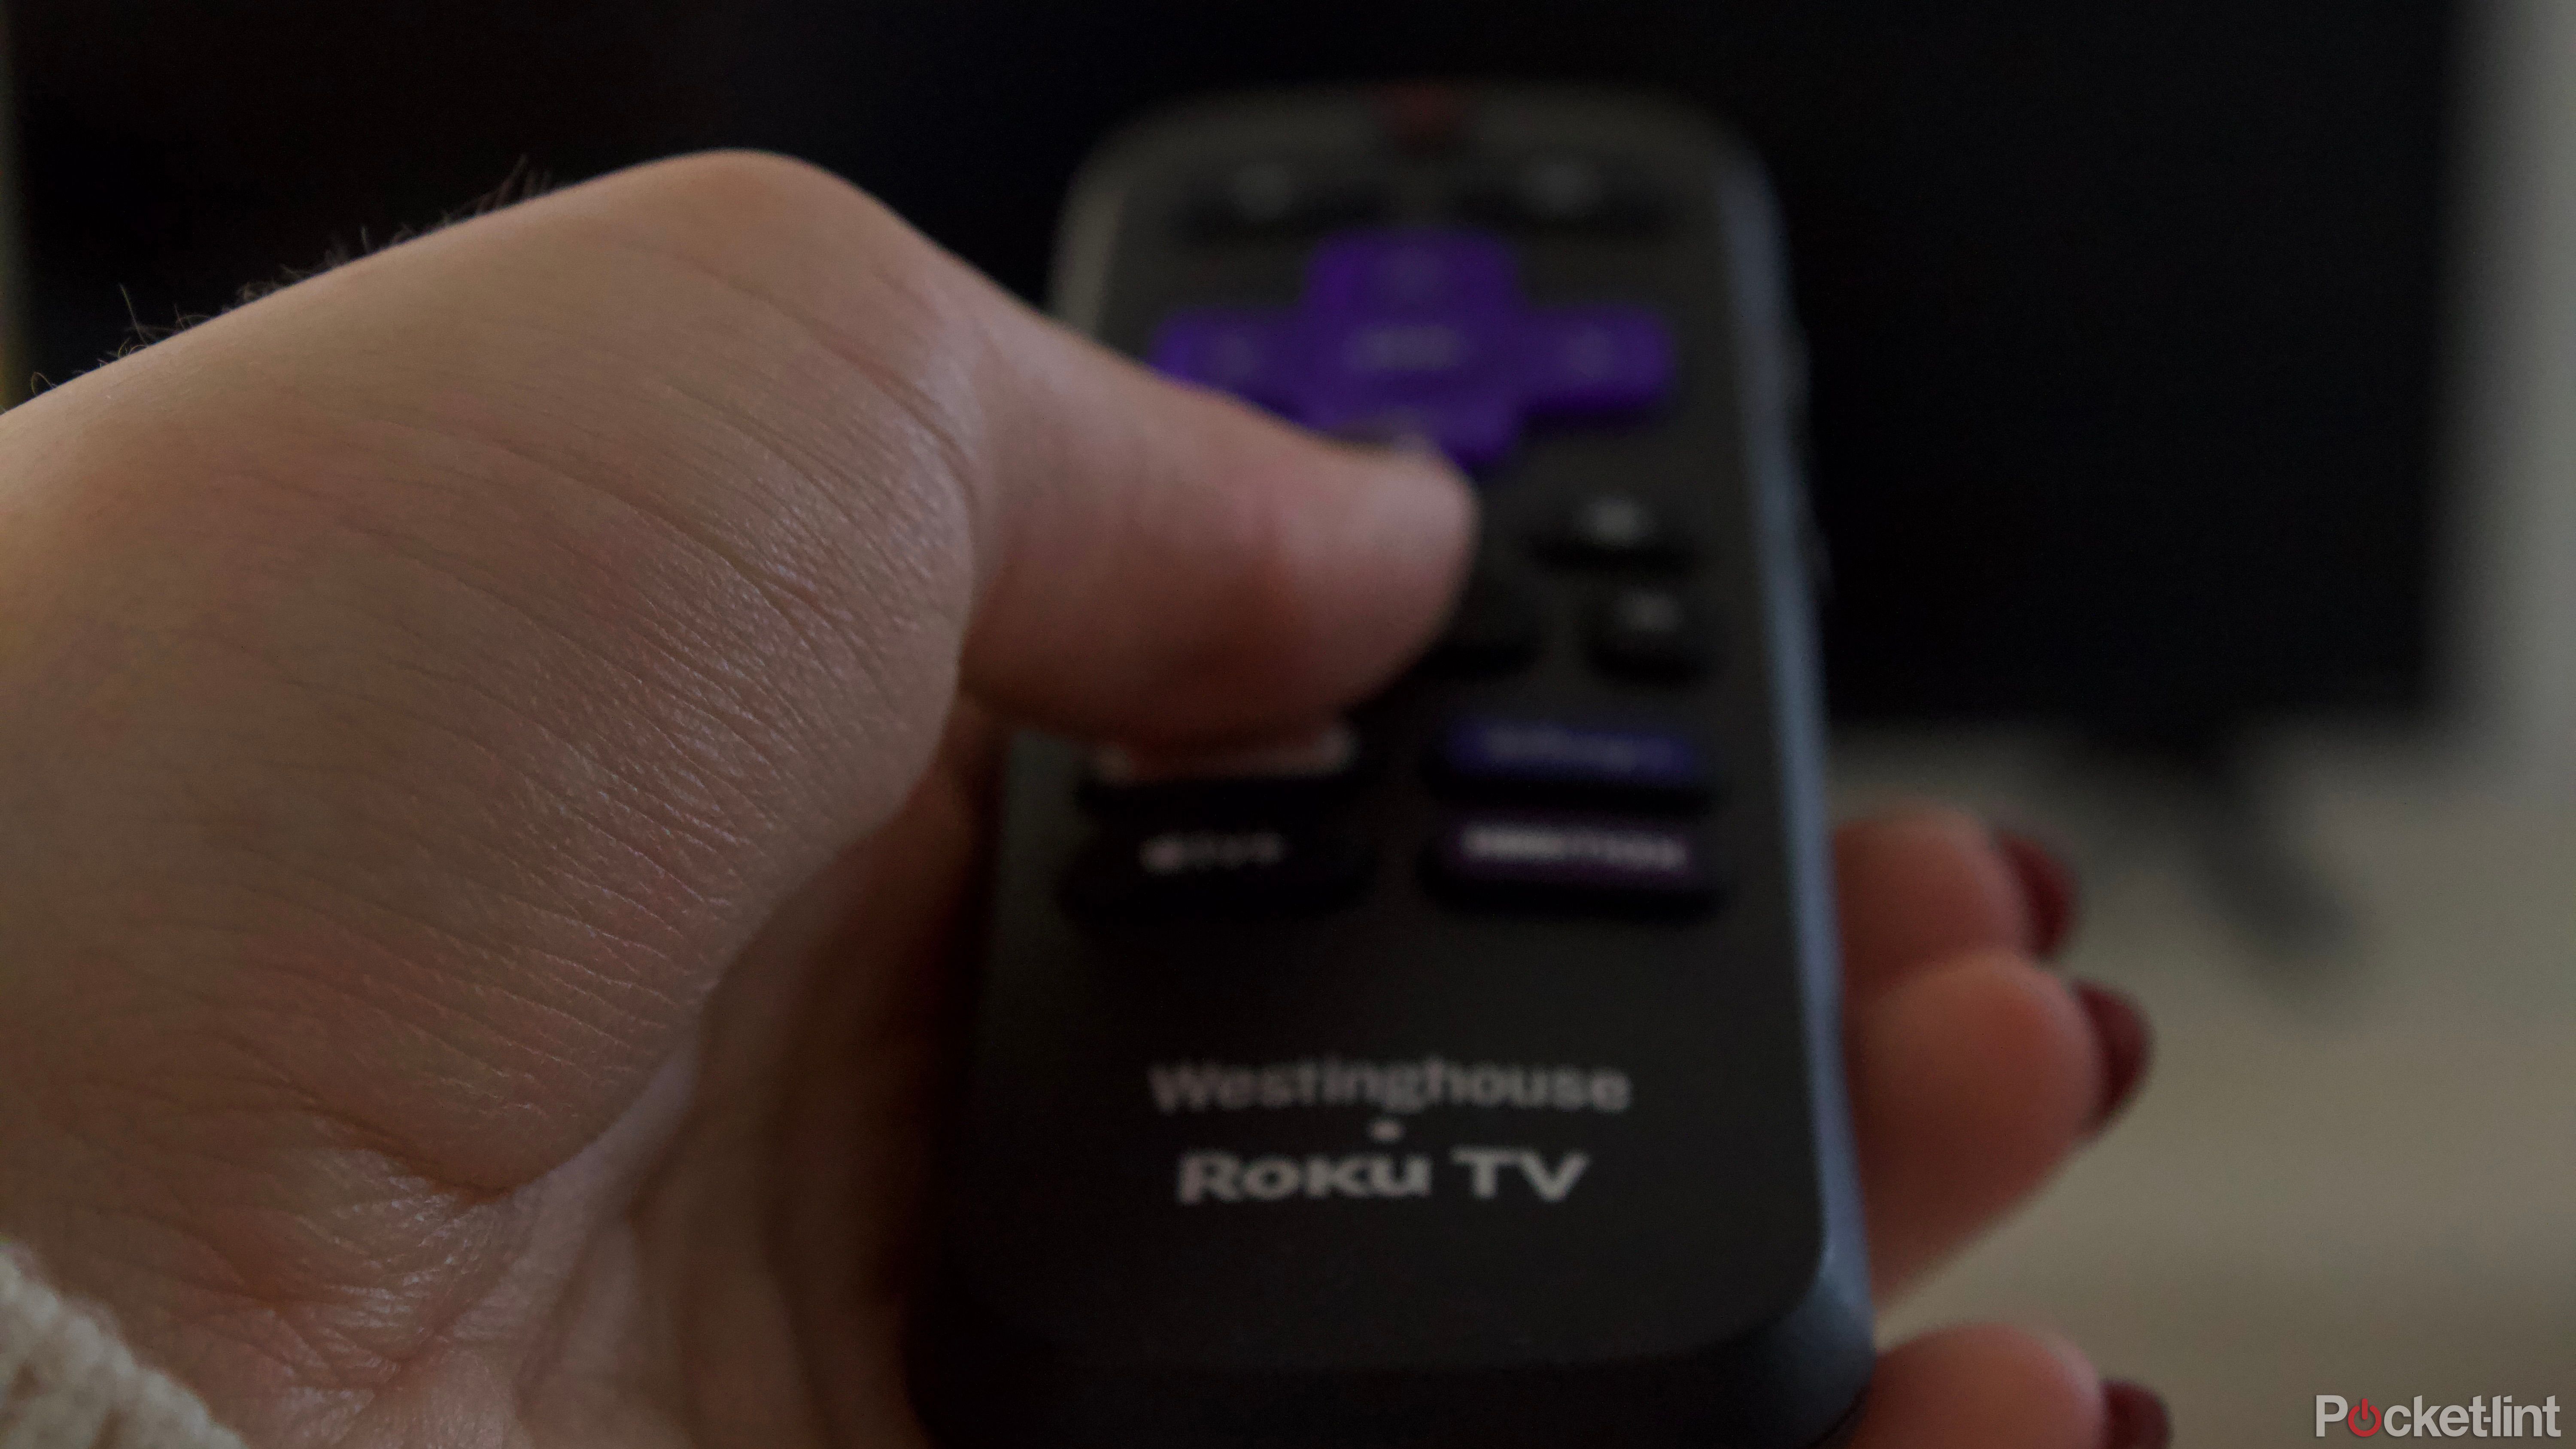 Regular Roku TV remote